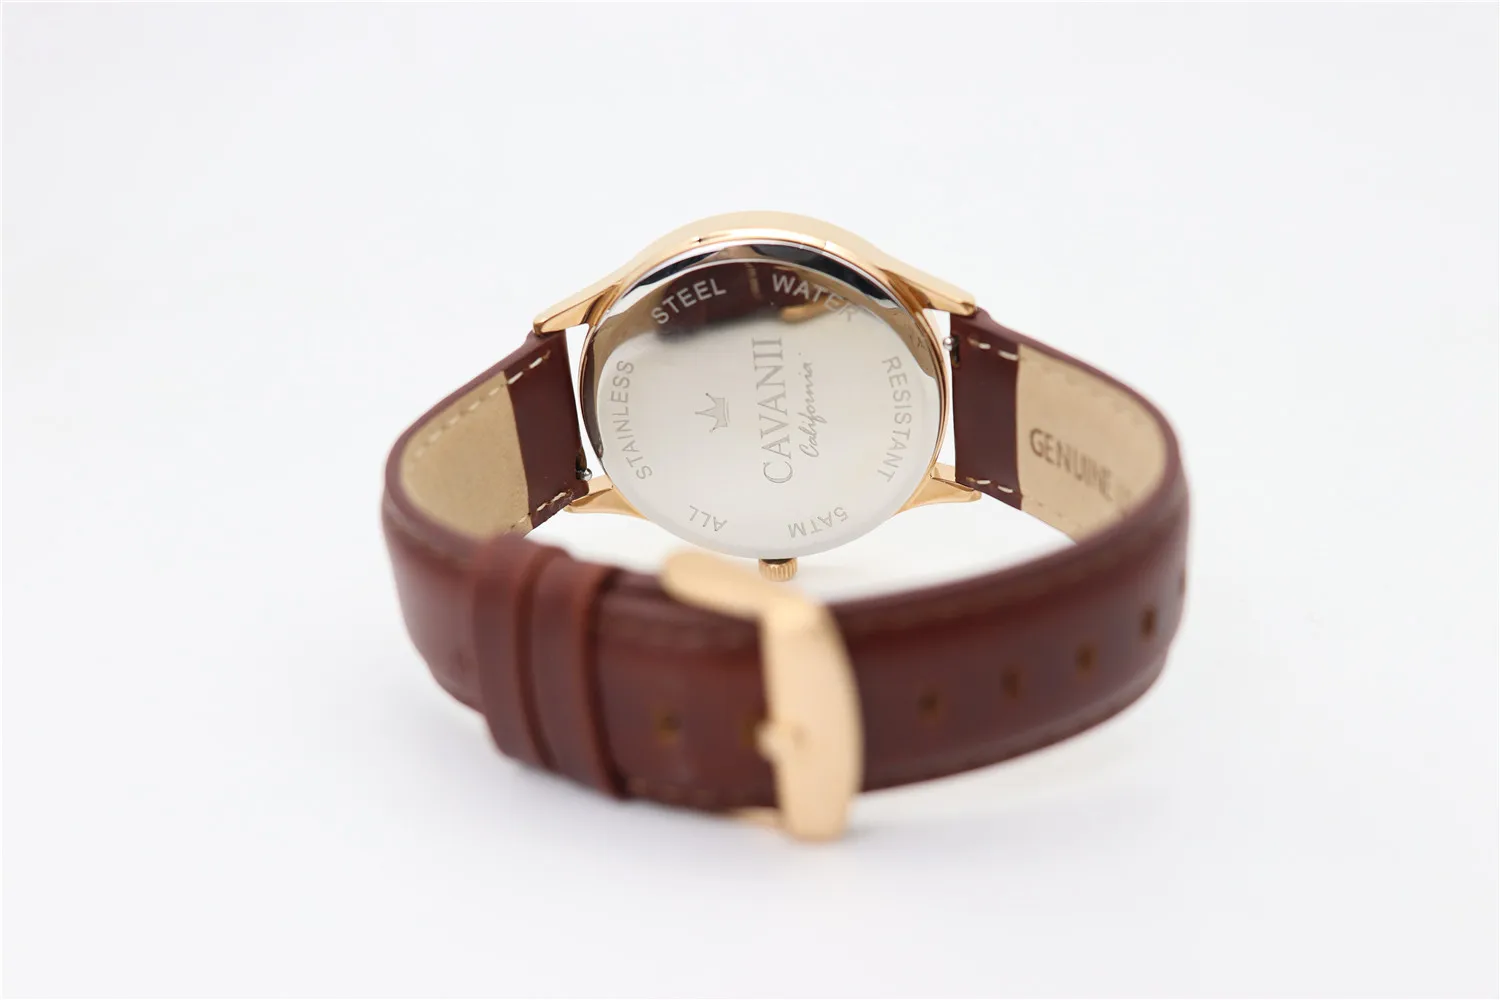 2020 Brand simple design your own logo custom mens oem wrist watches for men